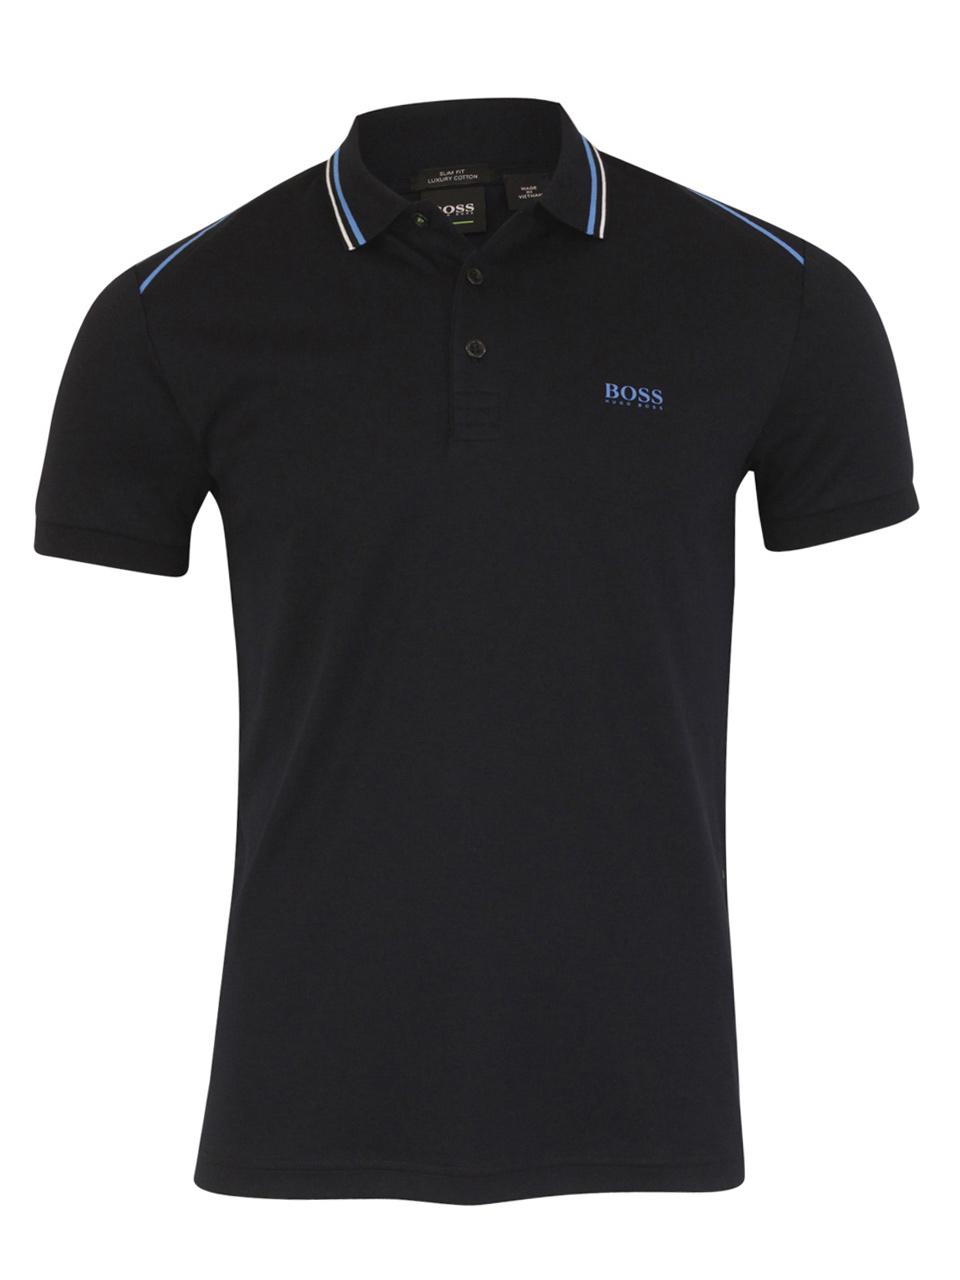 twijfel Augment Pekkadillo Hugo Boss Men's Paule-1 Slim Fit Short Sleeve Cotton Polo Shirt | JoyLot.com